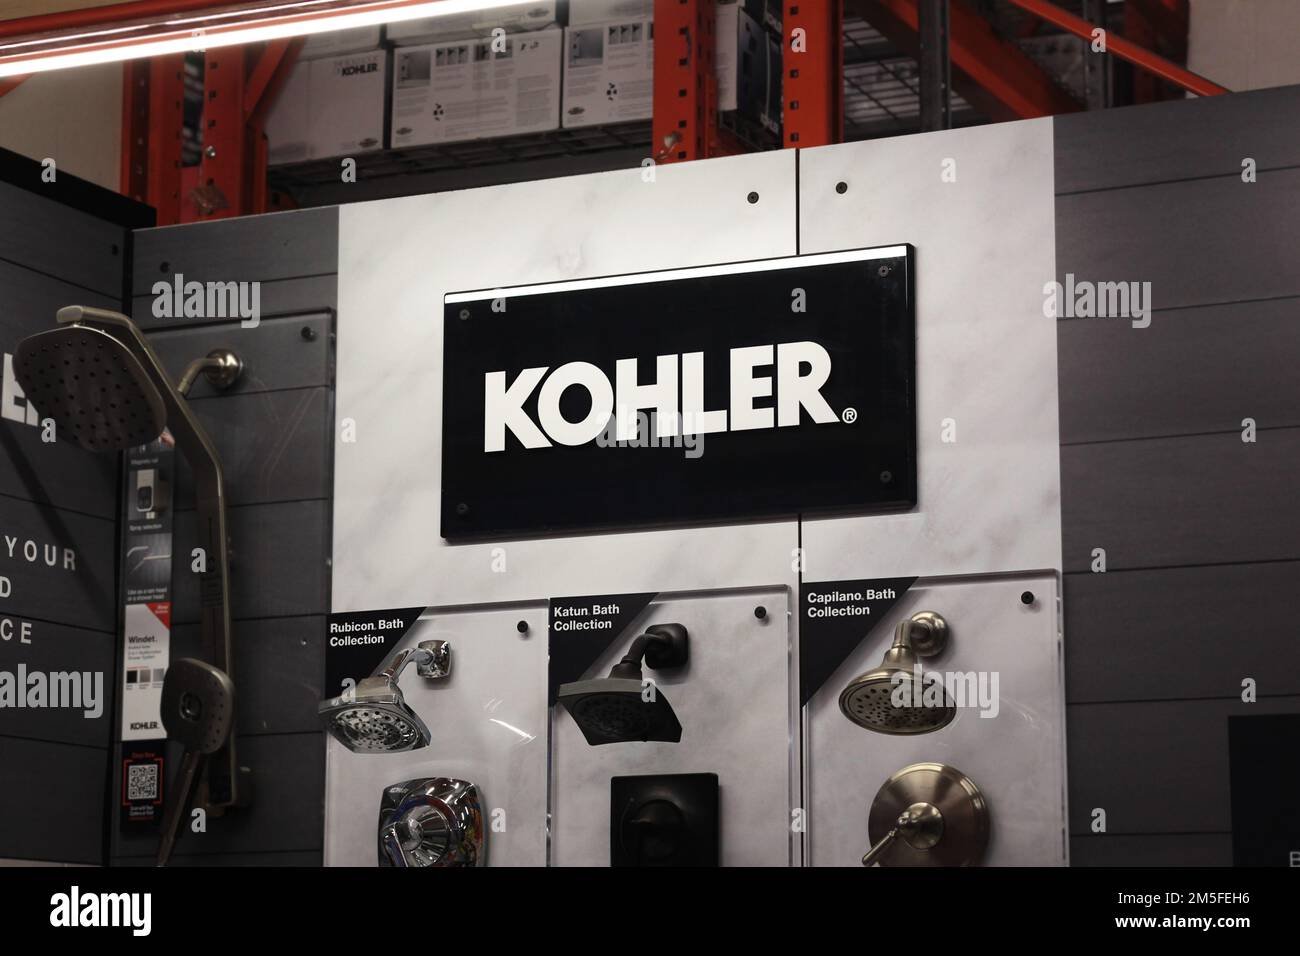 Honolulu, HI - December 27, 2022: Kohler brand shower head display at Home Depot hardware store Stock Photo